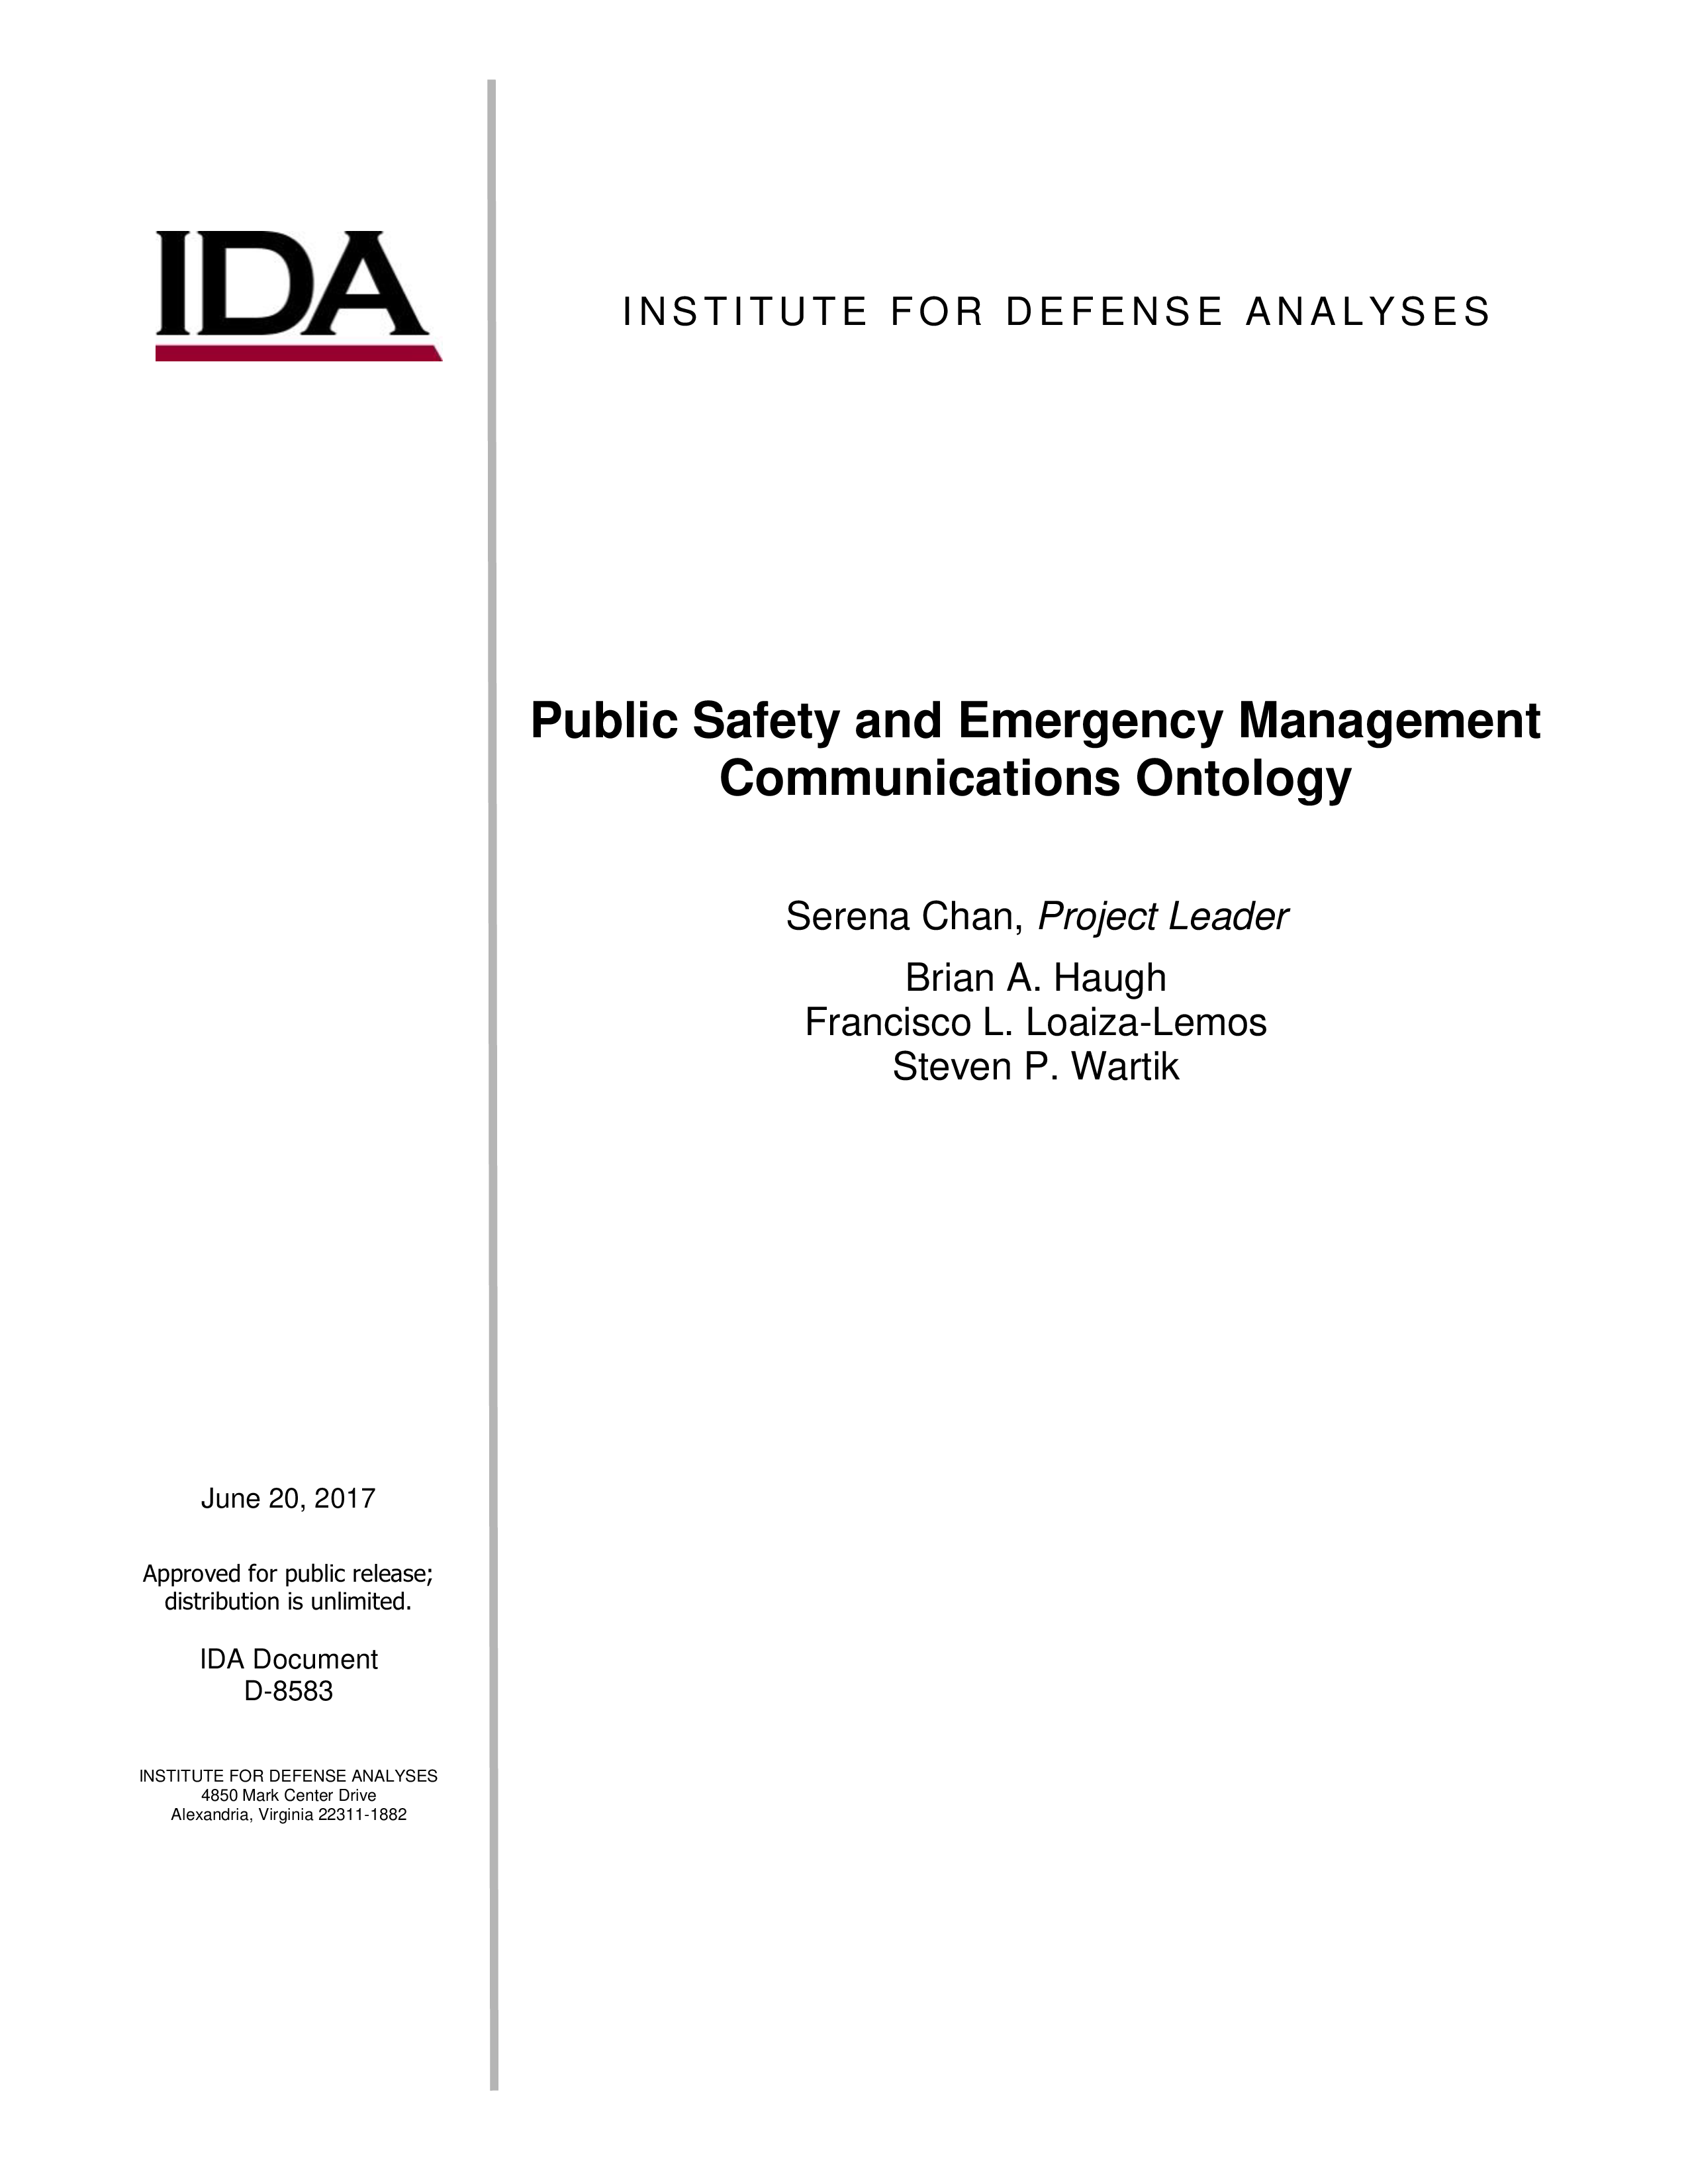 Public Safety and Emergency Management Communications Ontology